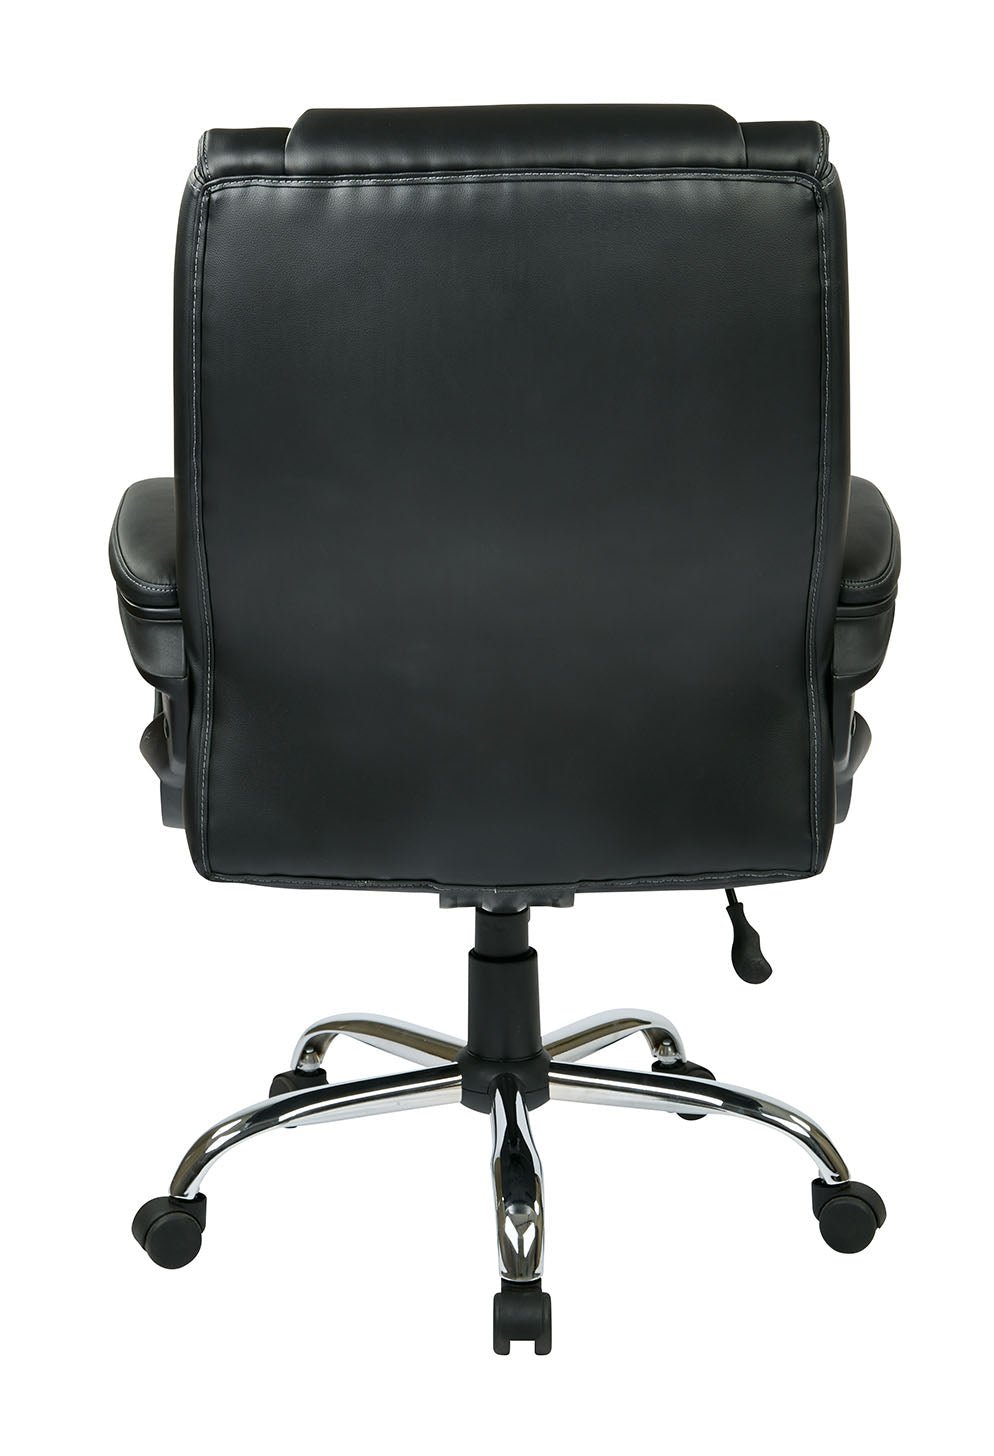 WorkSmart Executive Eco-Leather Big Mans Chair - EC1283C-EC3 - Functional Office Furniture - EC1283C-EC3